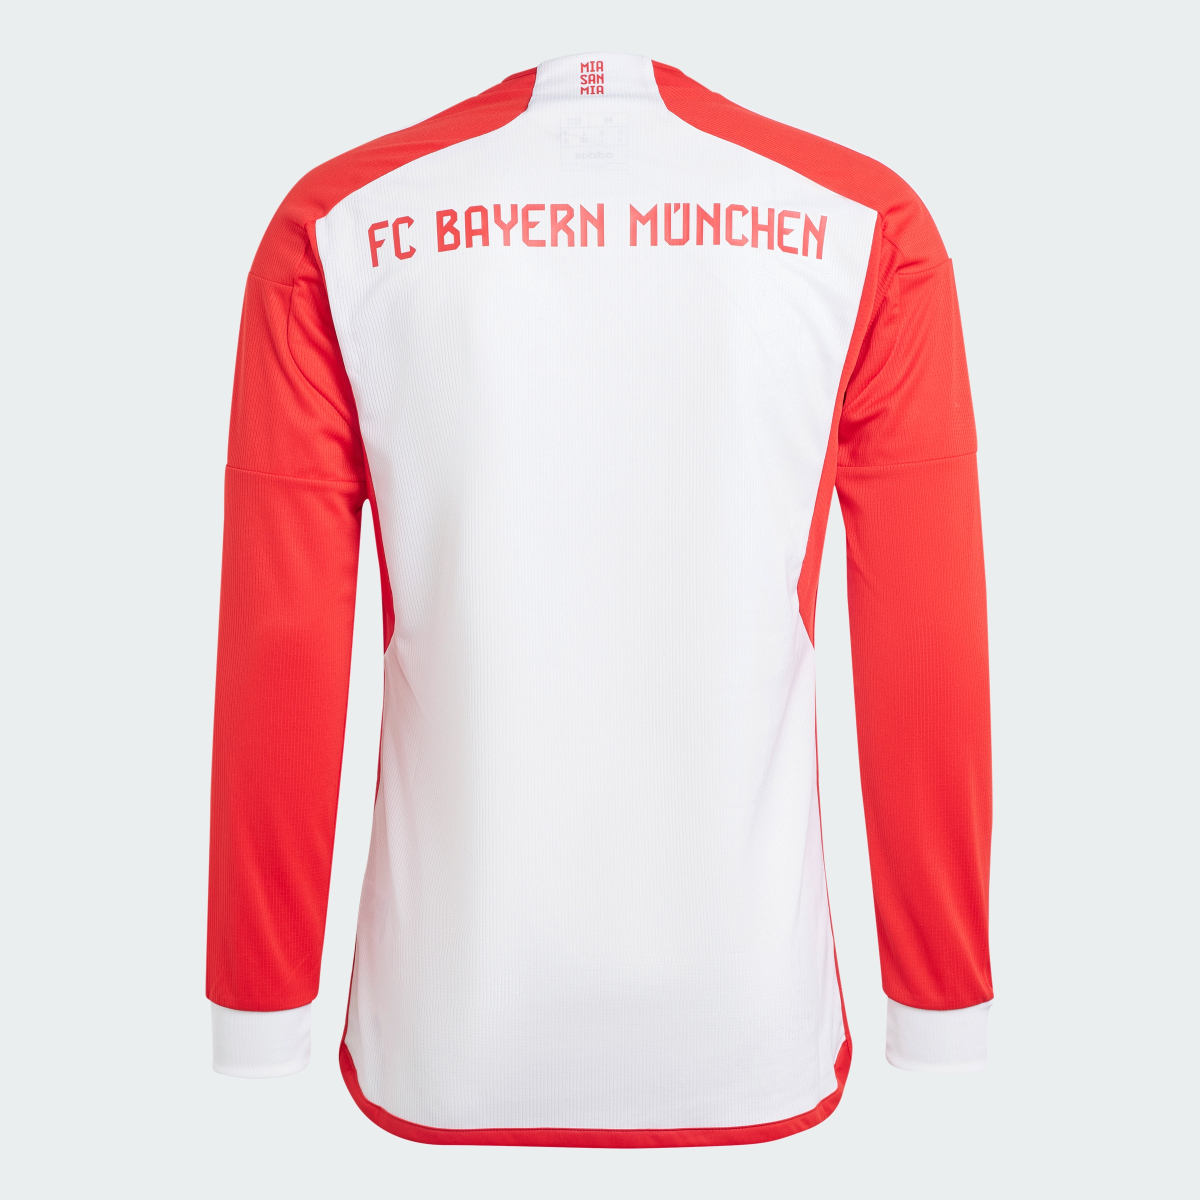 Adidas Camisola Principal de Manga Comprida 23/24 do FC Bayern München. 6